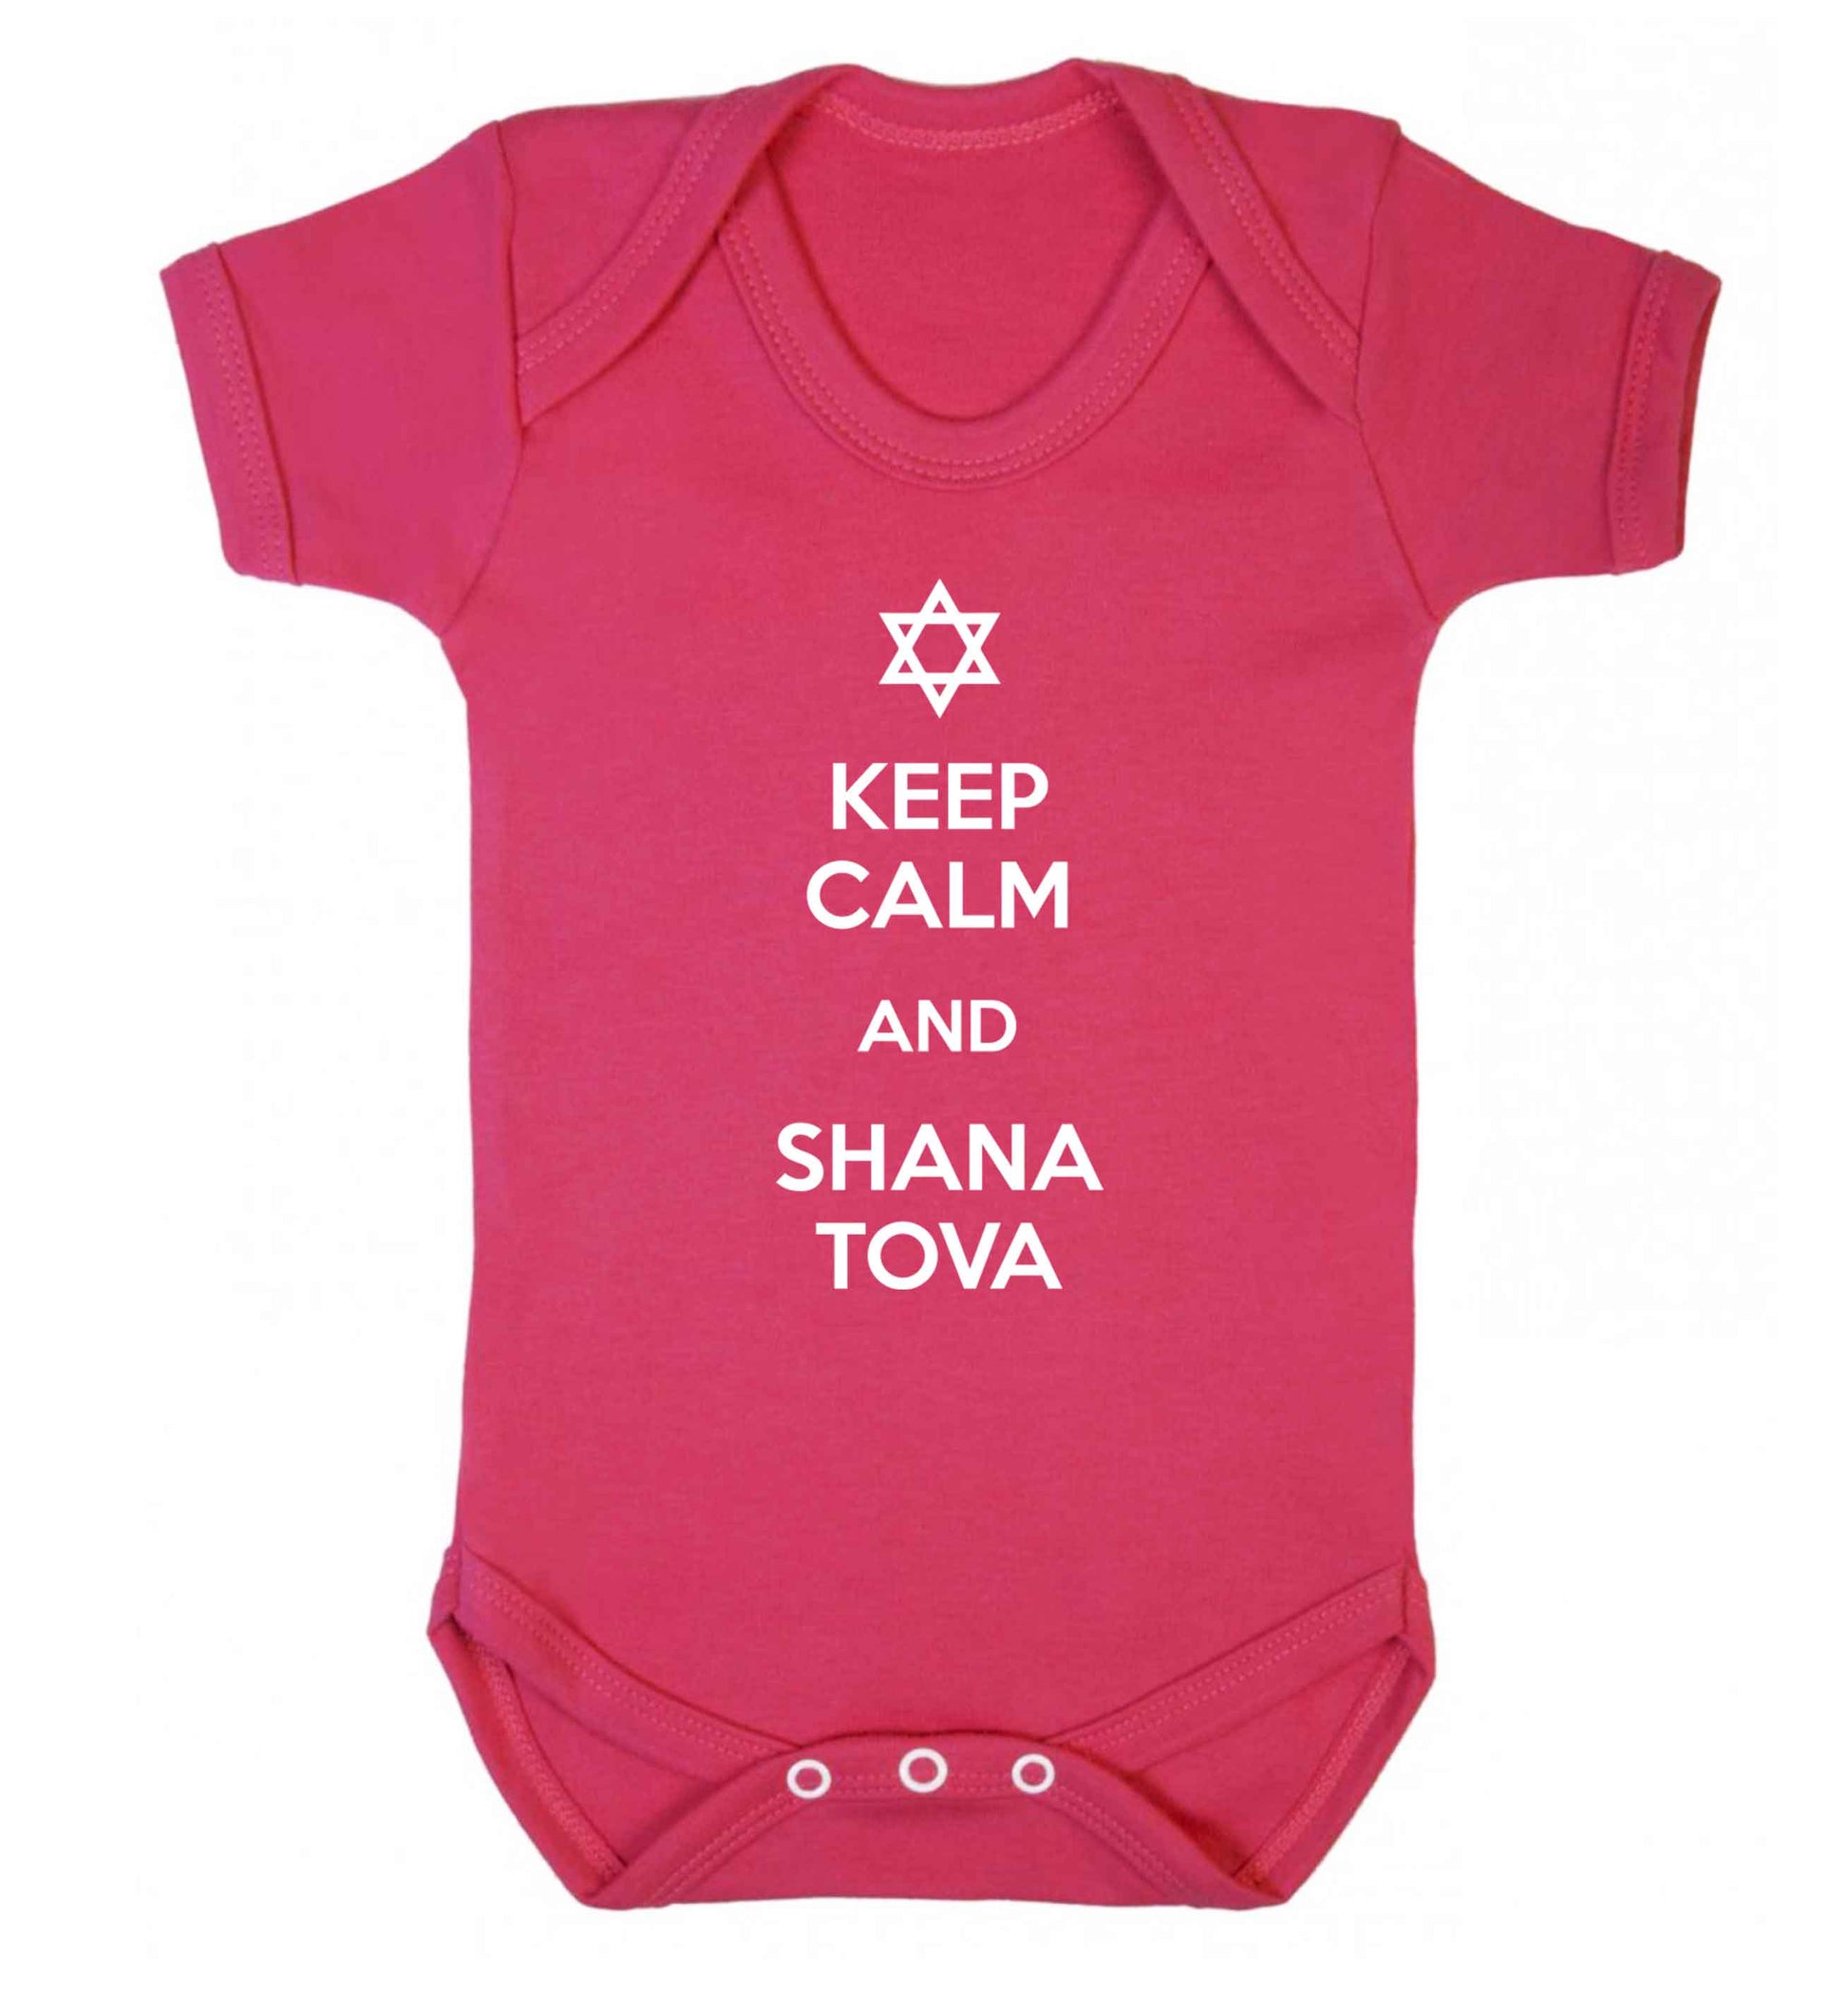 Keep calm and shana tova Baby Vest dark pink 18-24 months